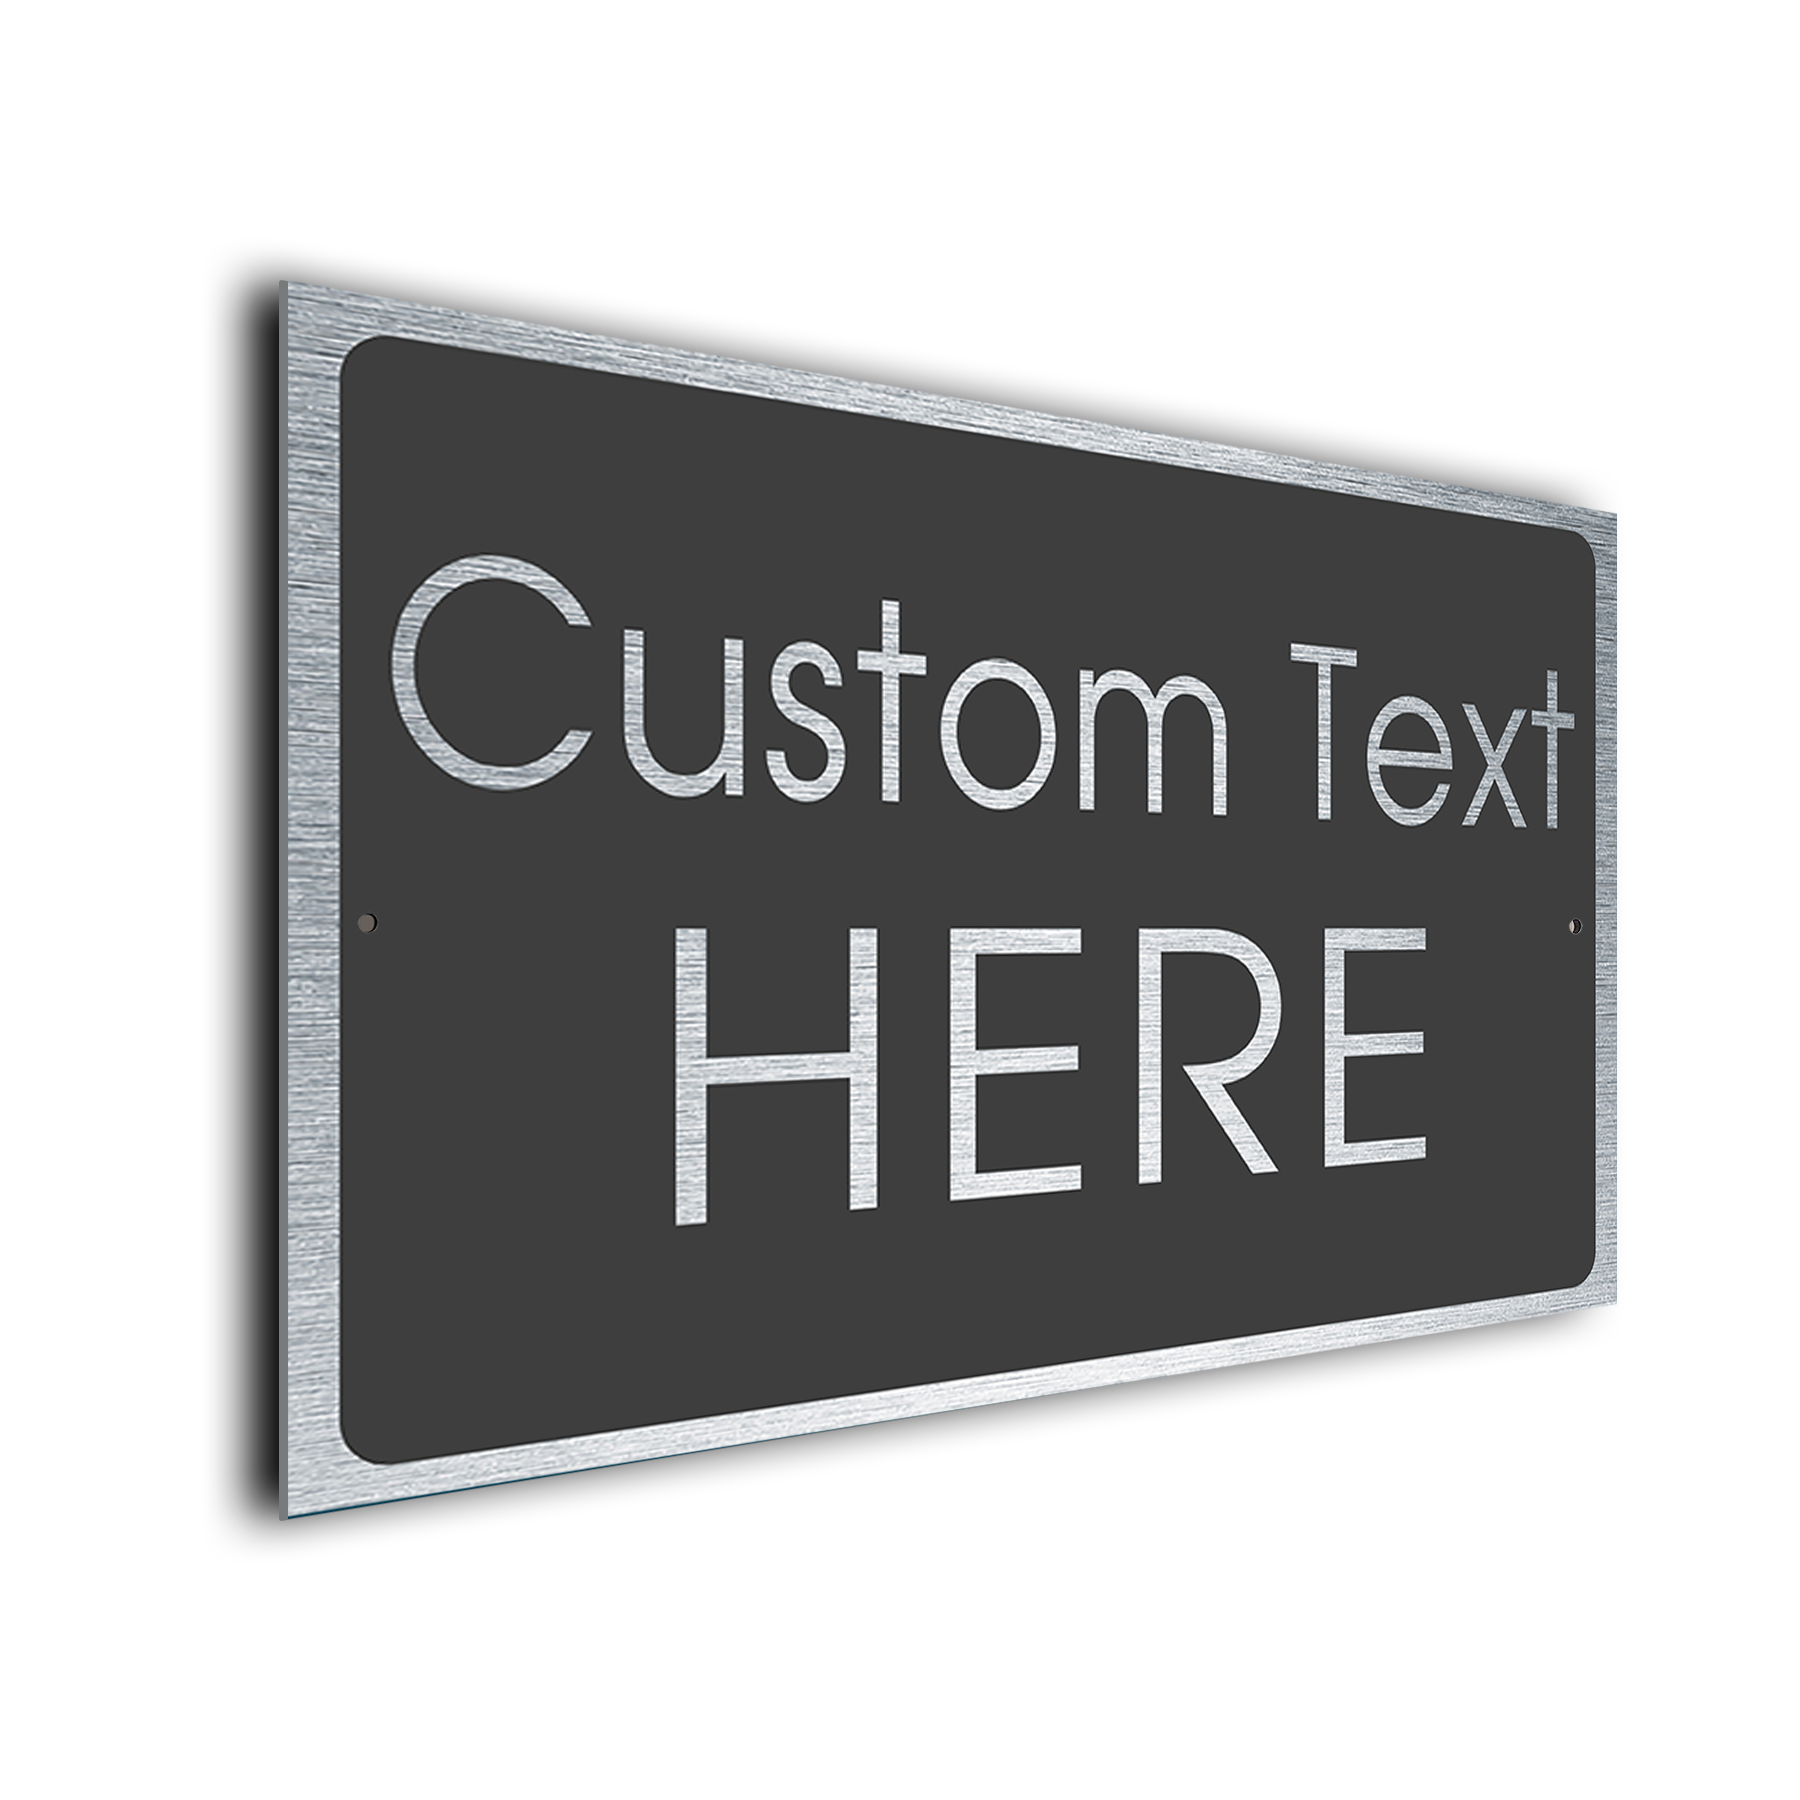 Modern Custom Text signs